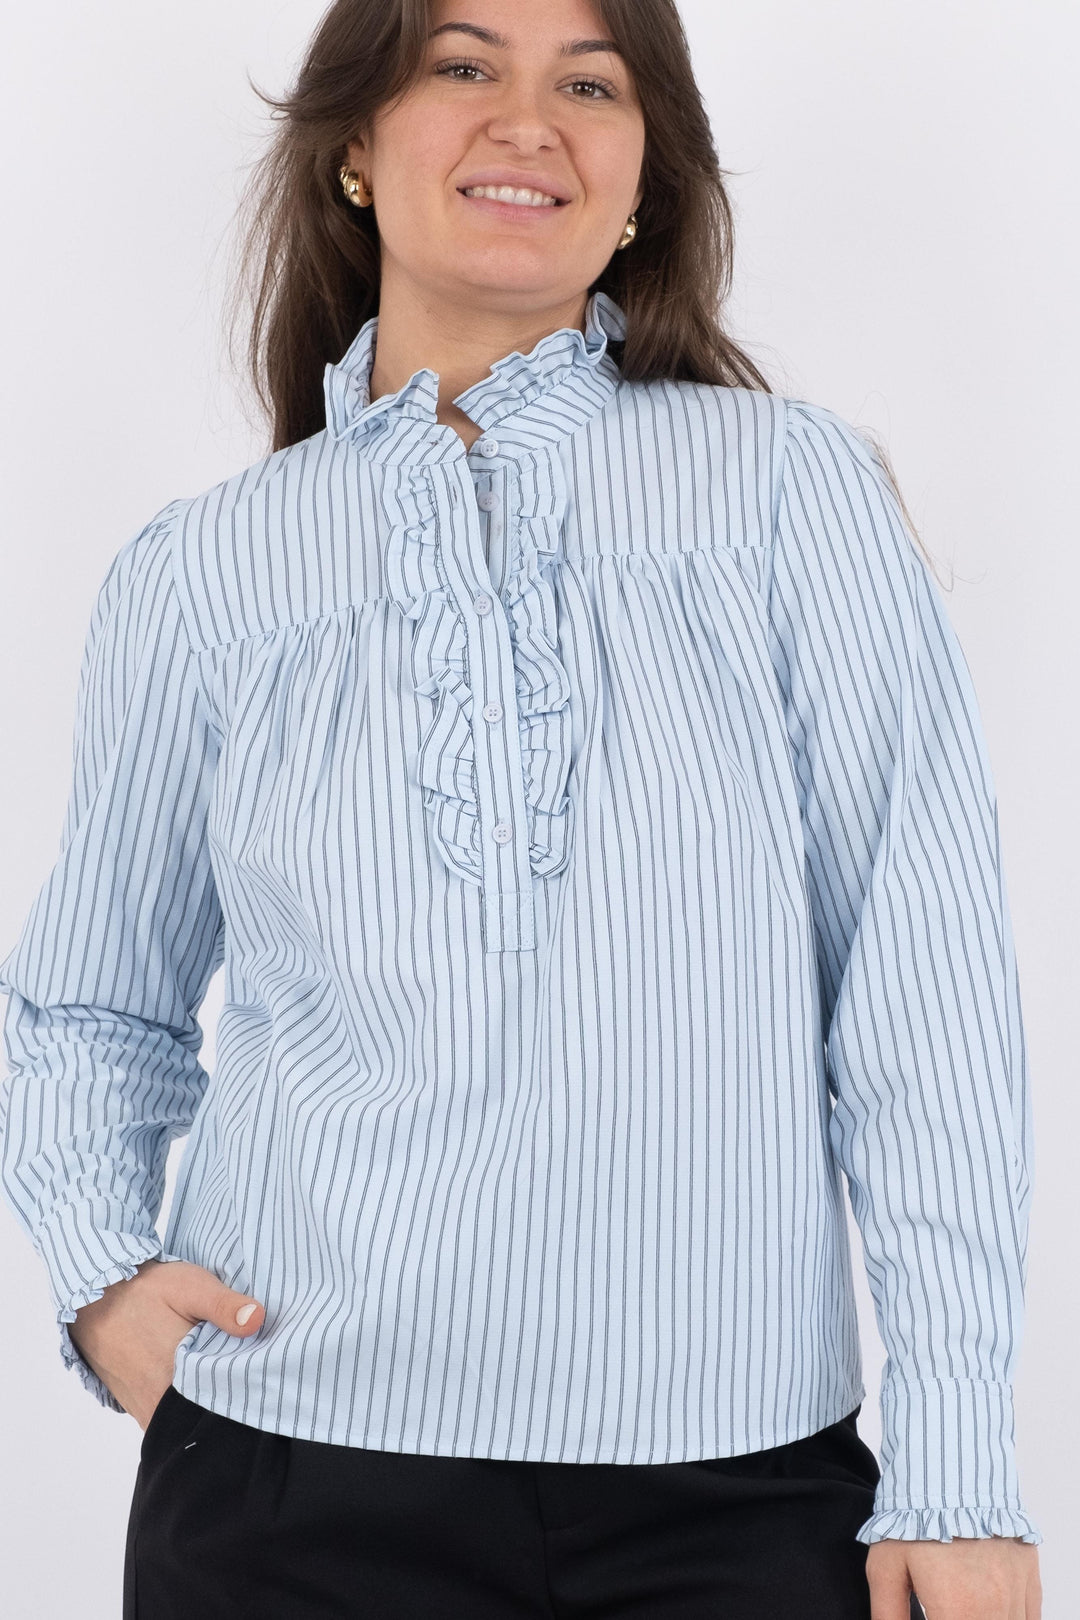 Neo Noir - Justine Stripe Shirt - Light Blue